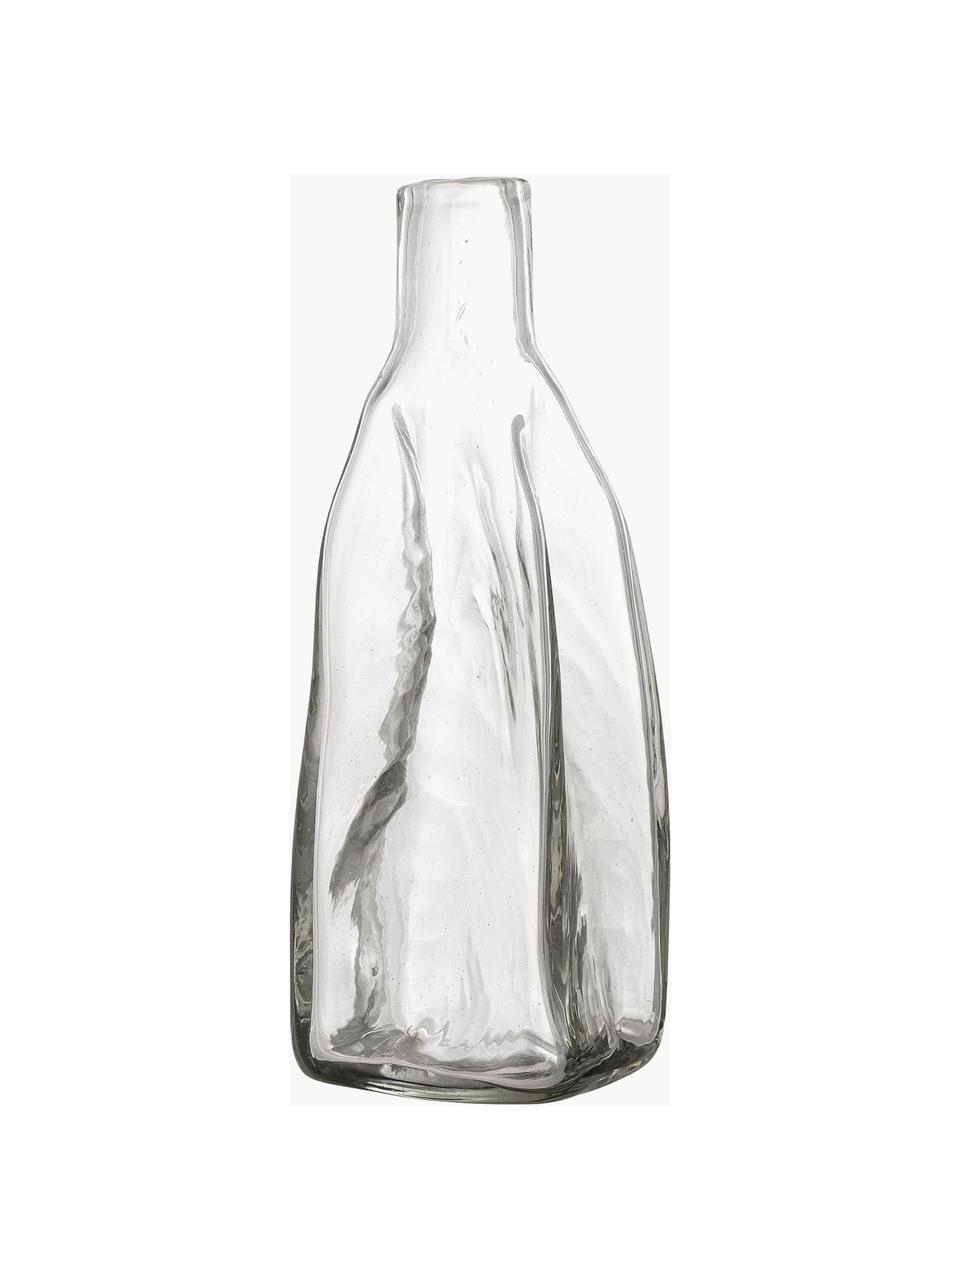 Mondgeblazen waterkaraf Lenka in biologische vorm, 500 ml, Glas, Transparant, 500 ml